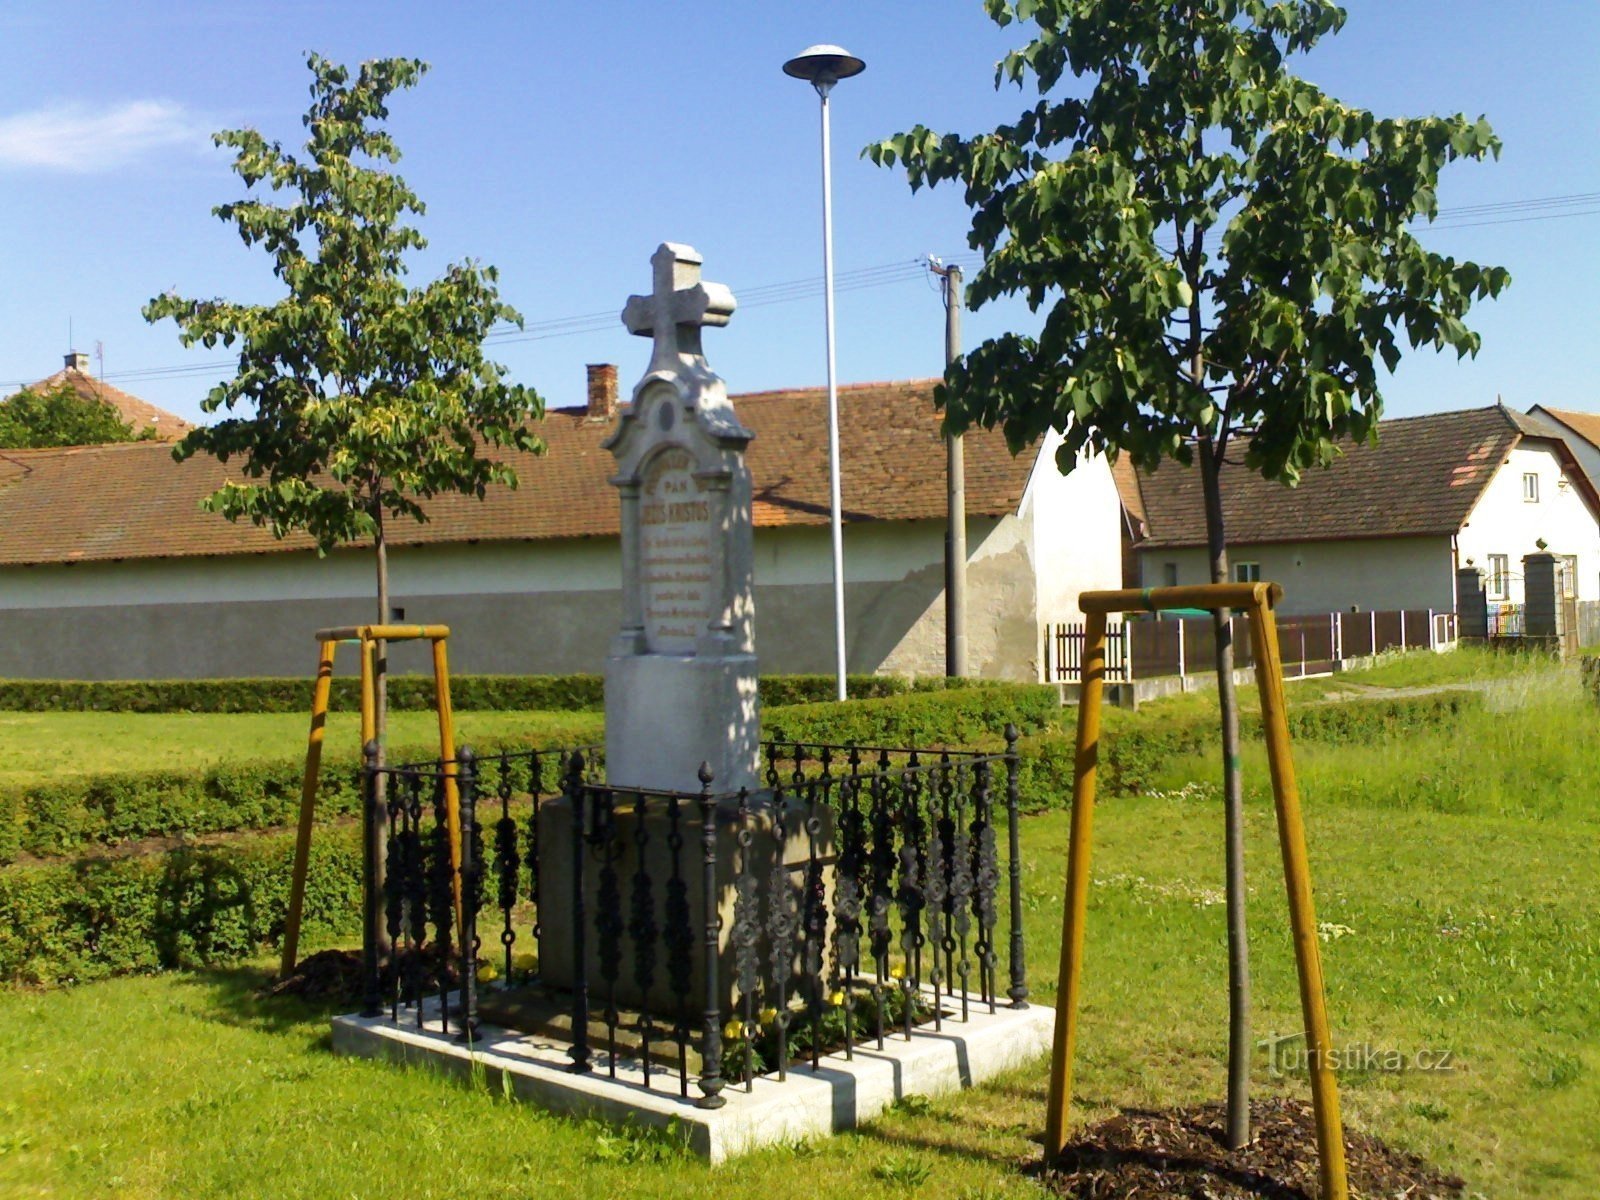 Хотеч - крест, посвященный Франтишеку Мрнявку.